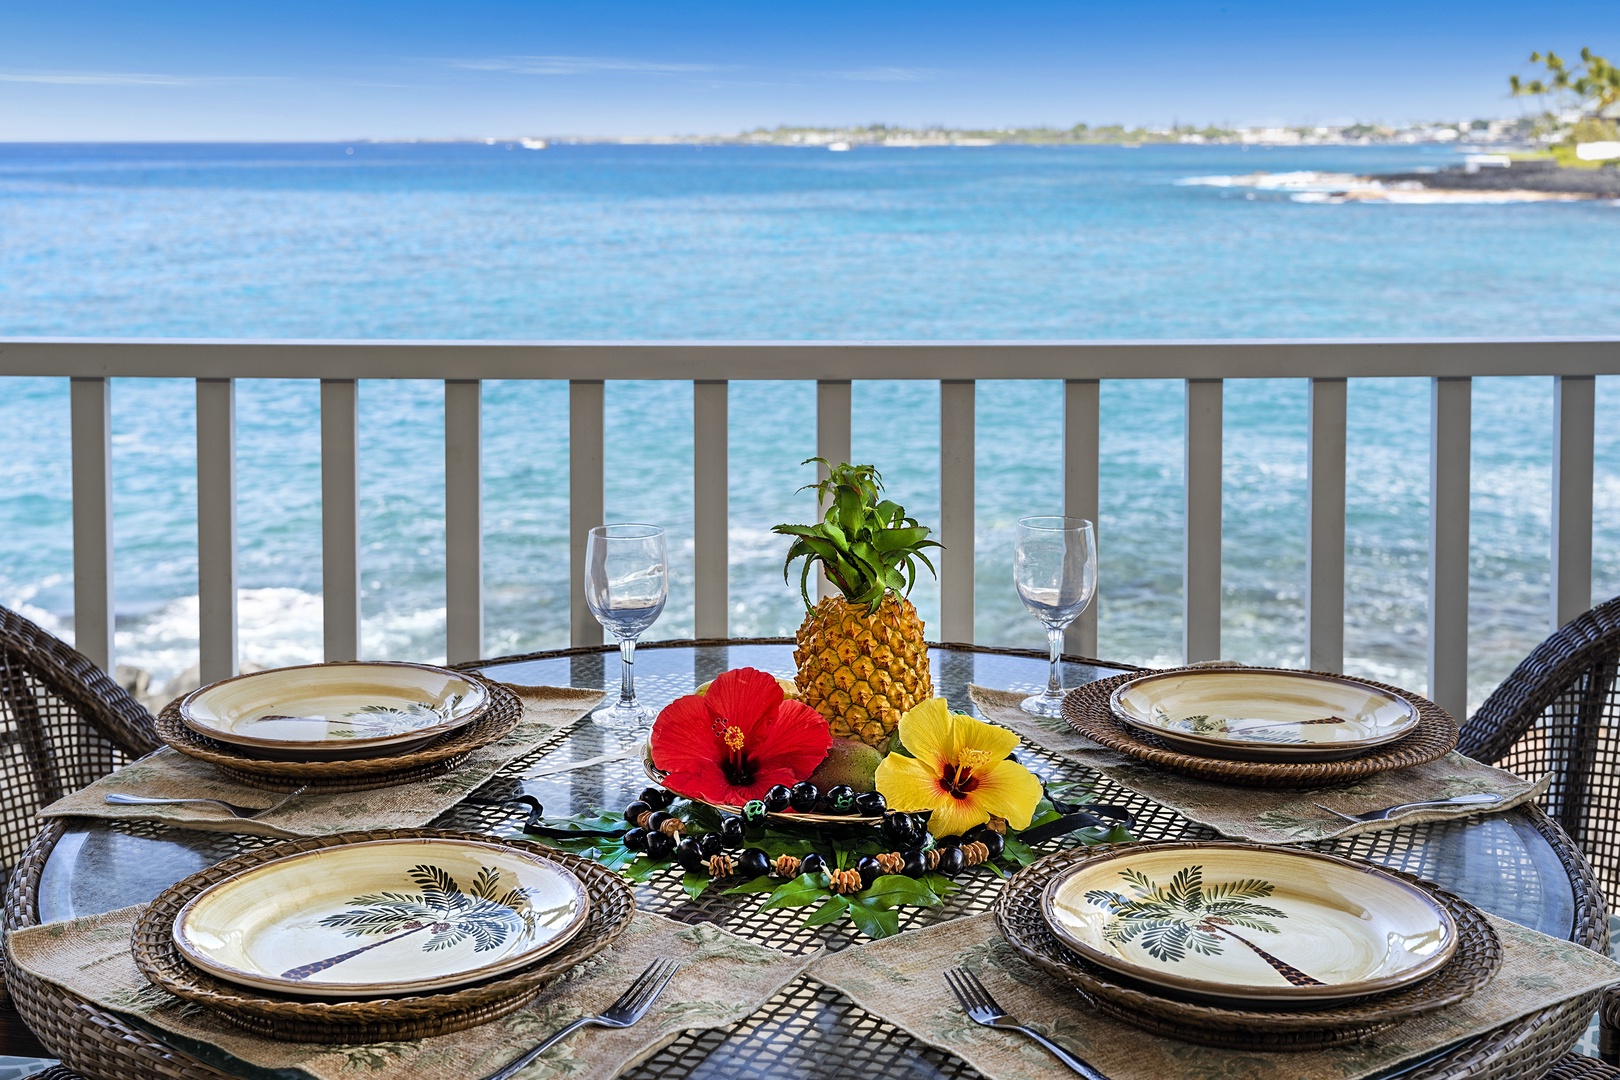 Kailua Kona Vacation Rentals, Sea Village 1105 - Dine at the oceans edge at Sea Village 1105!